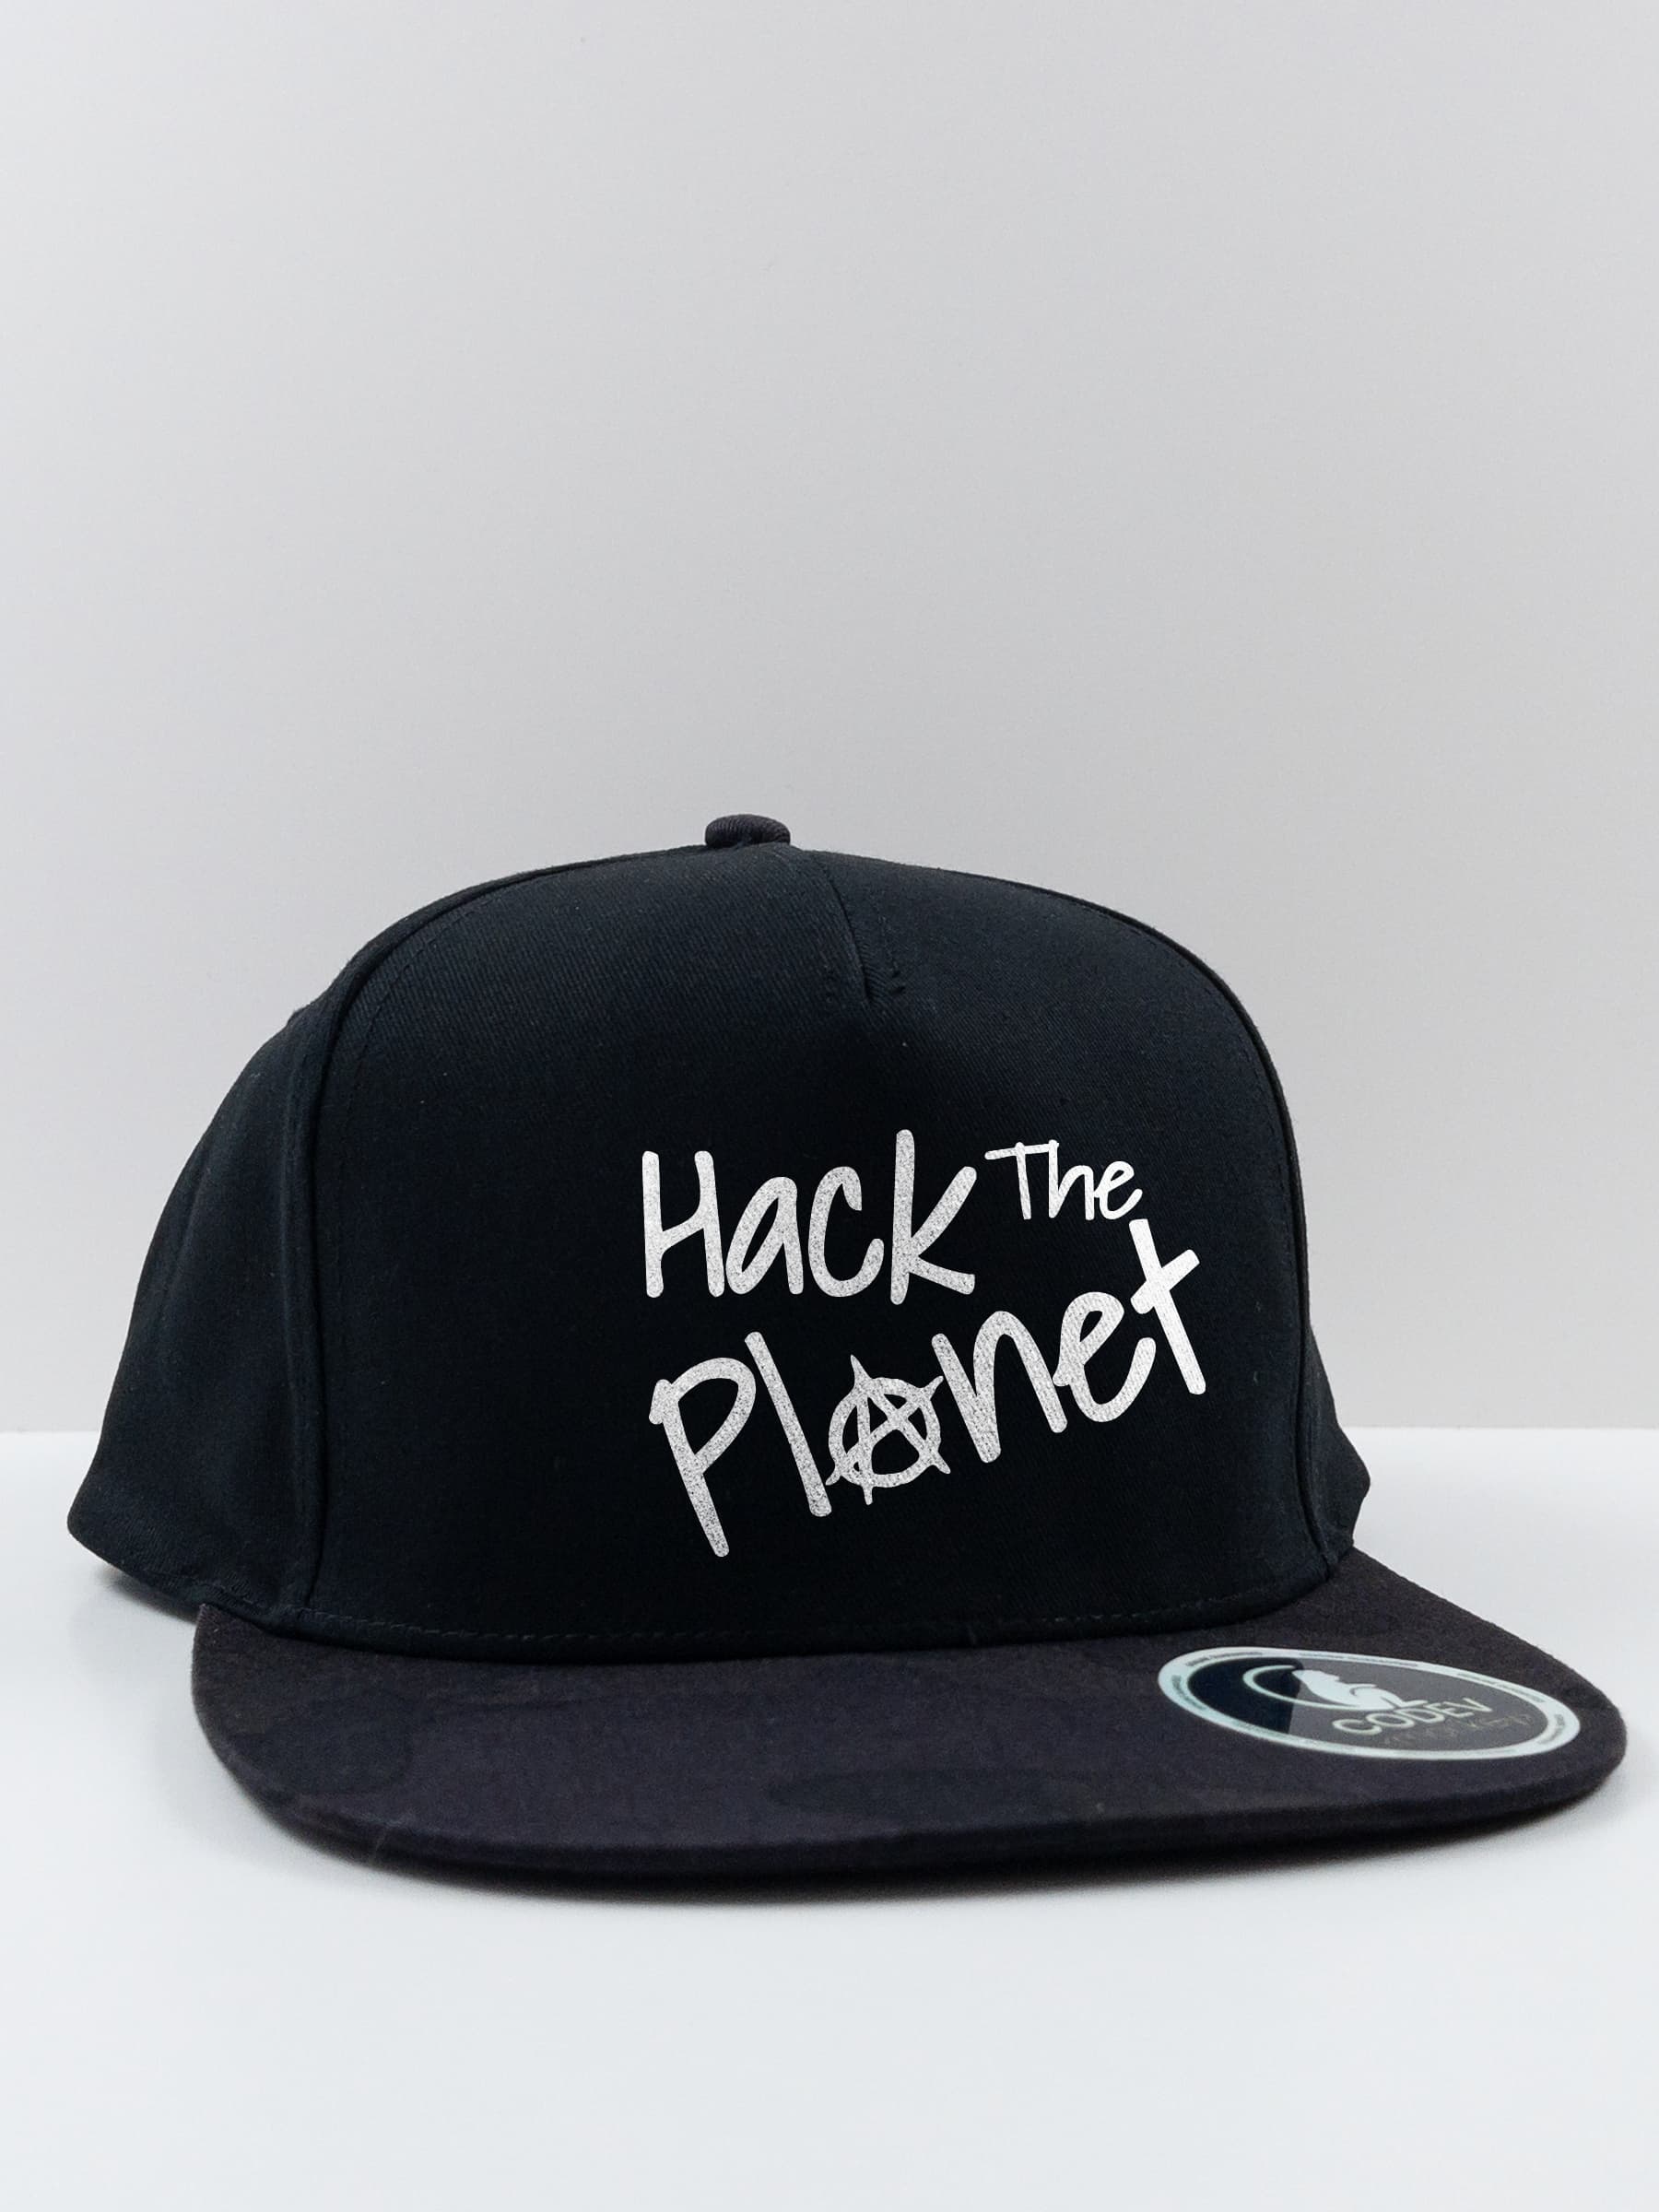 Gorra plana camo (Snapback) Hack the planet